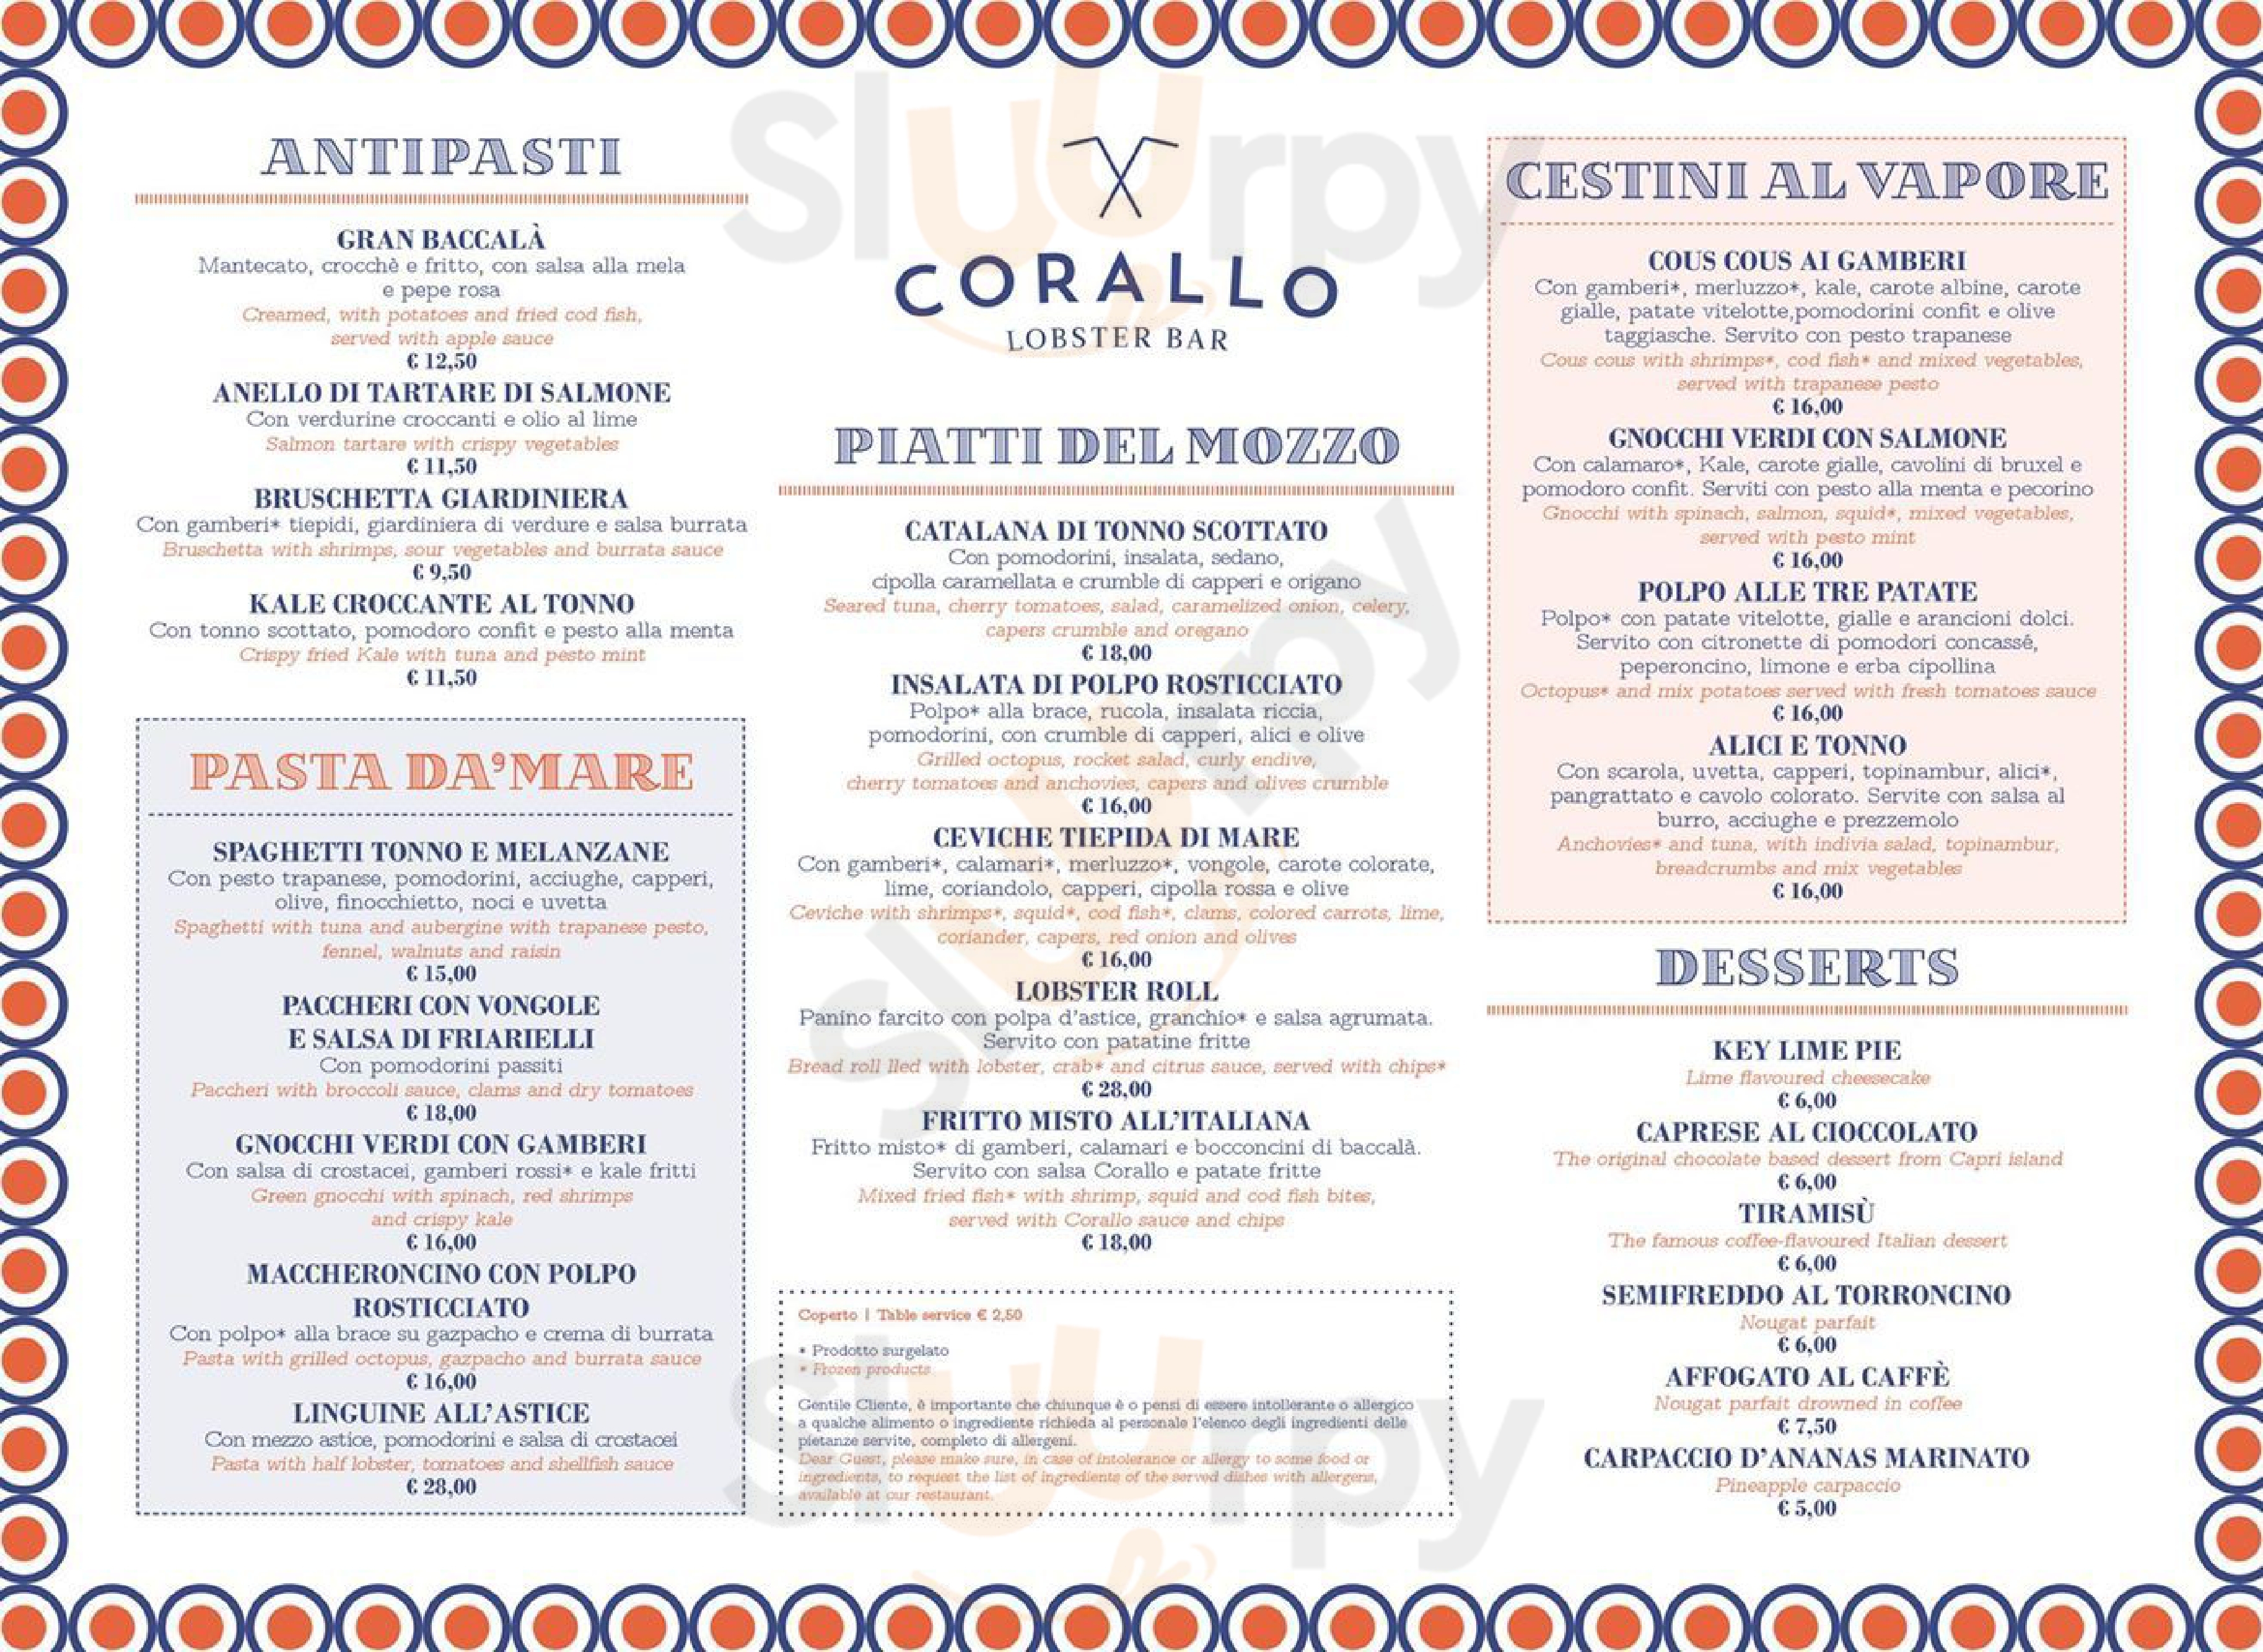 Corallo Lobster Bar Milano menù 1 pagina